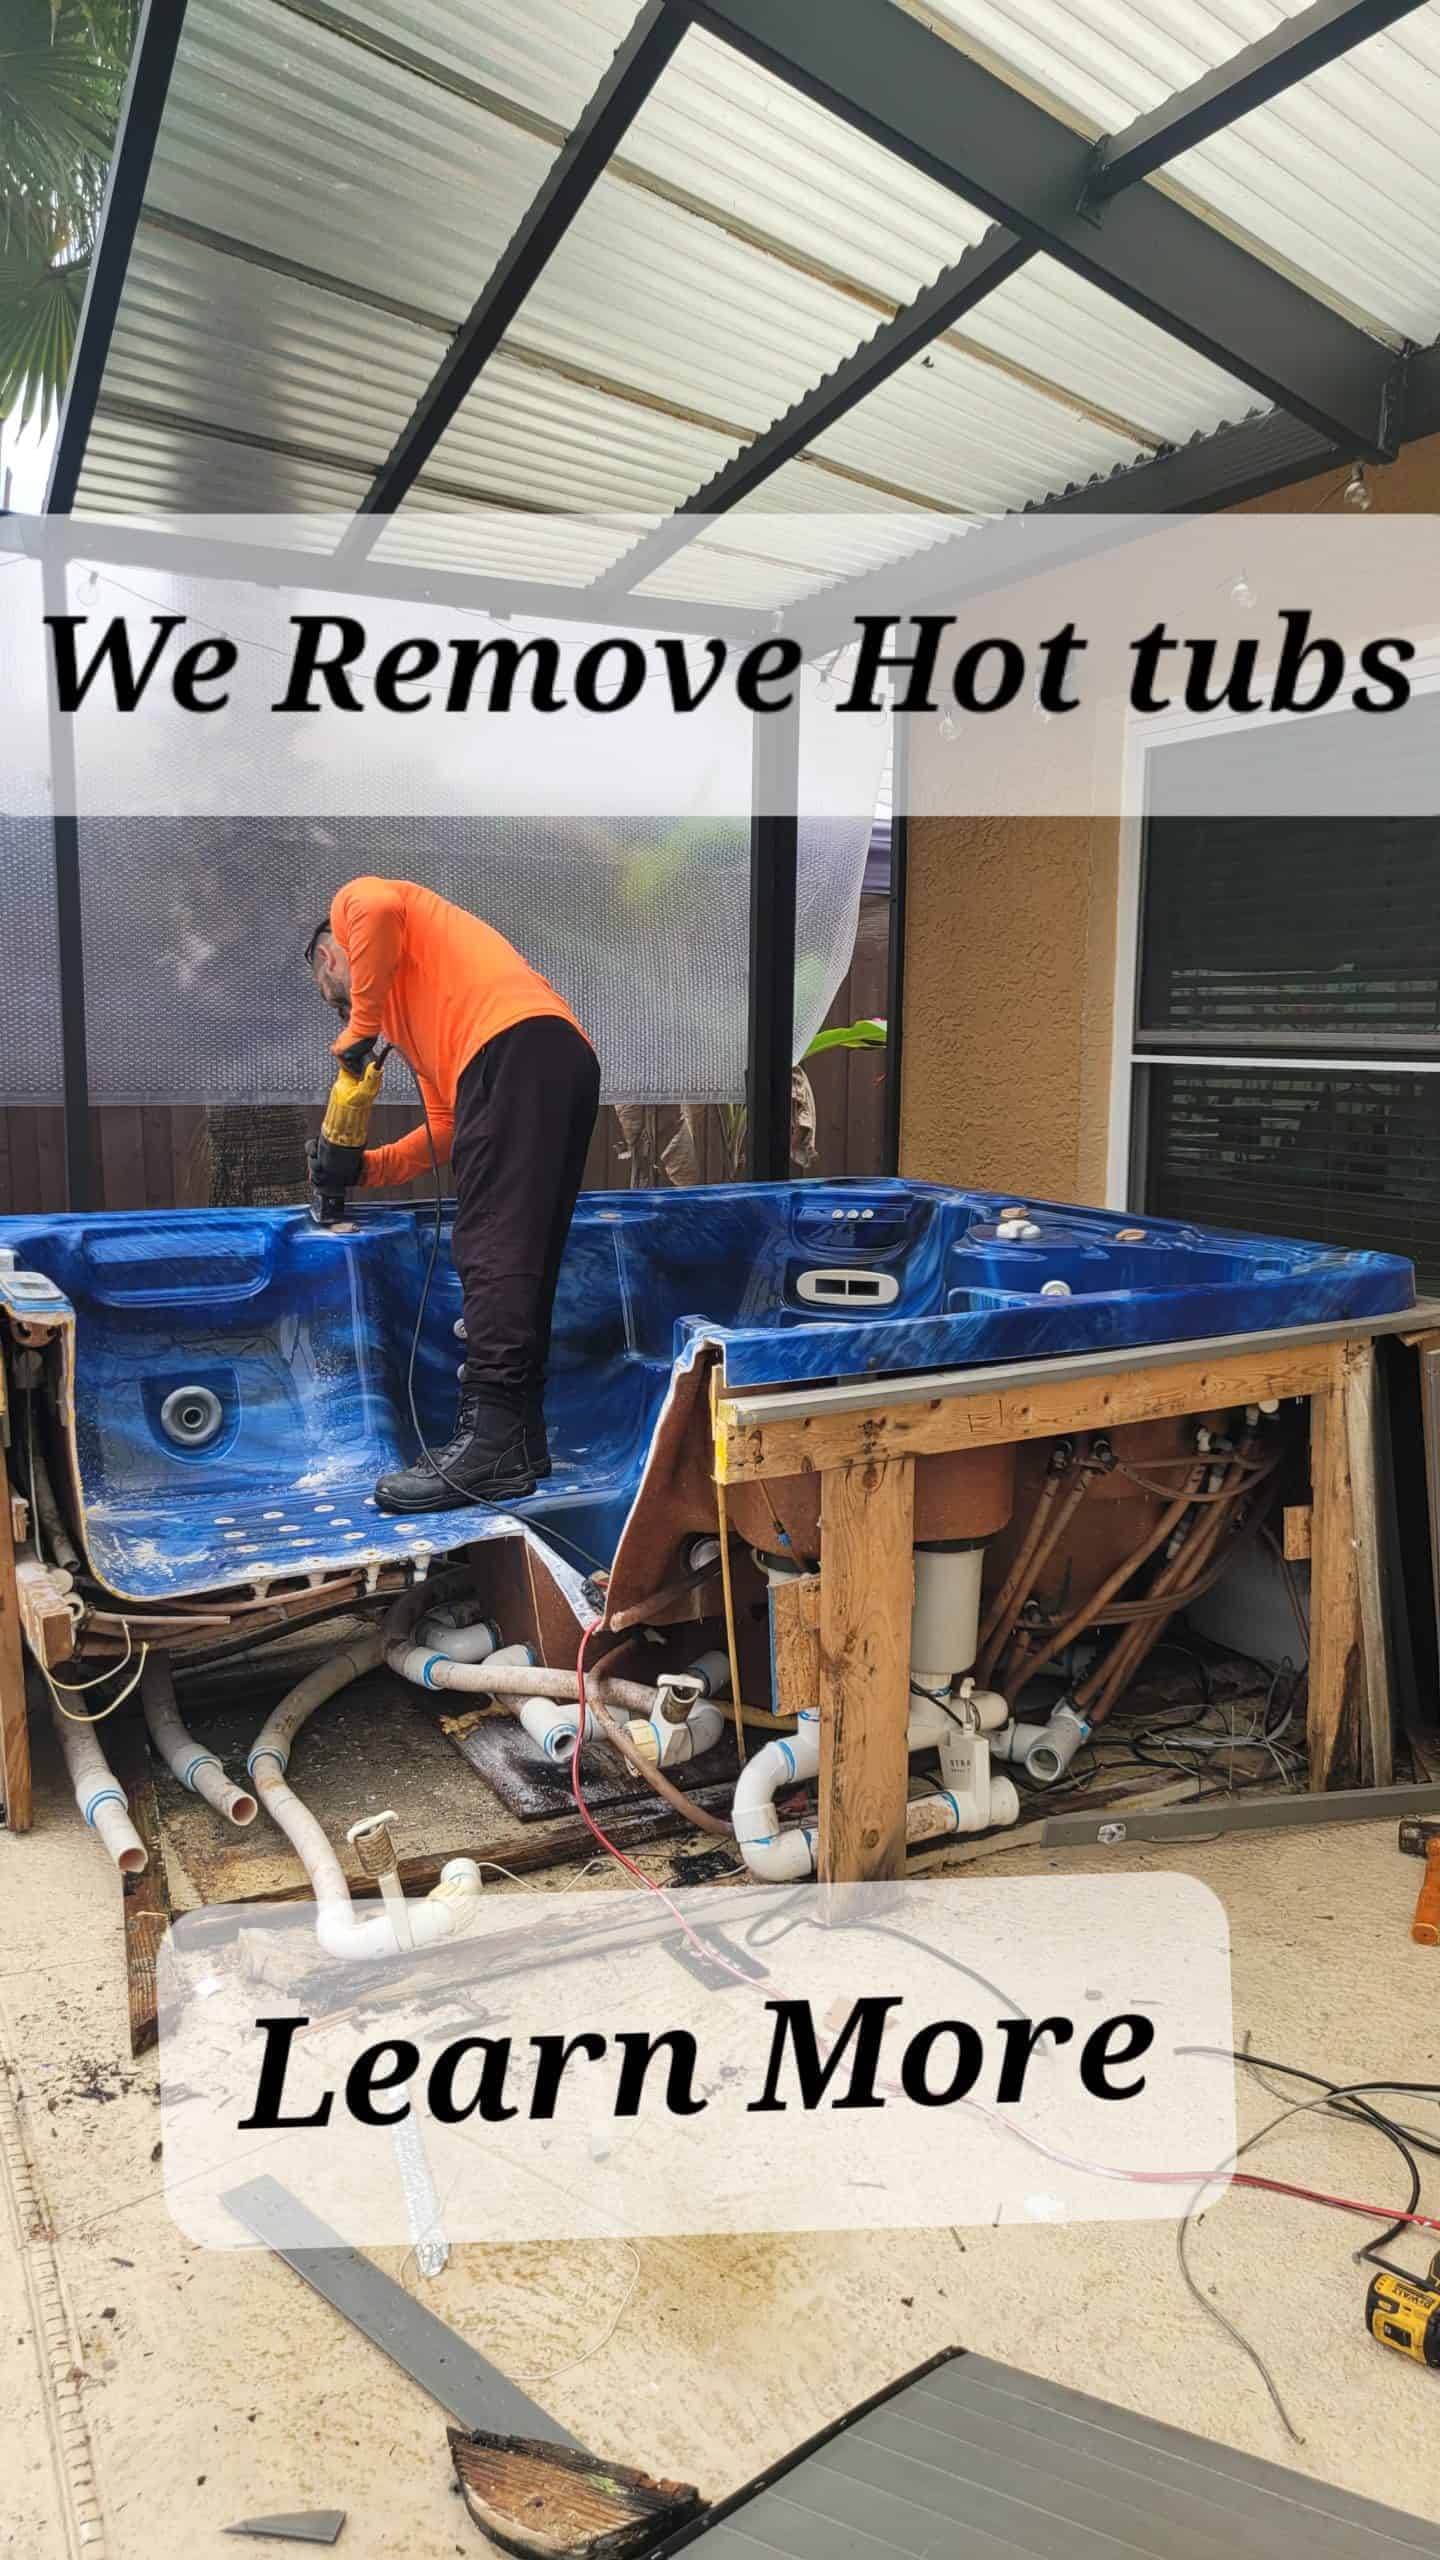 Hot tub removal